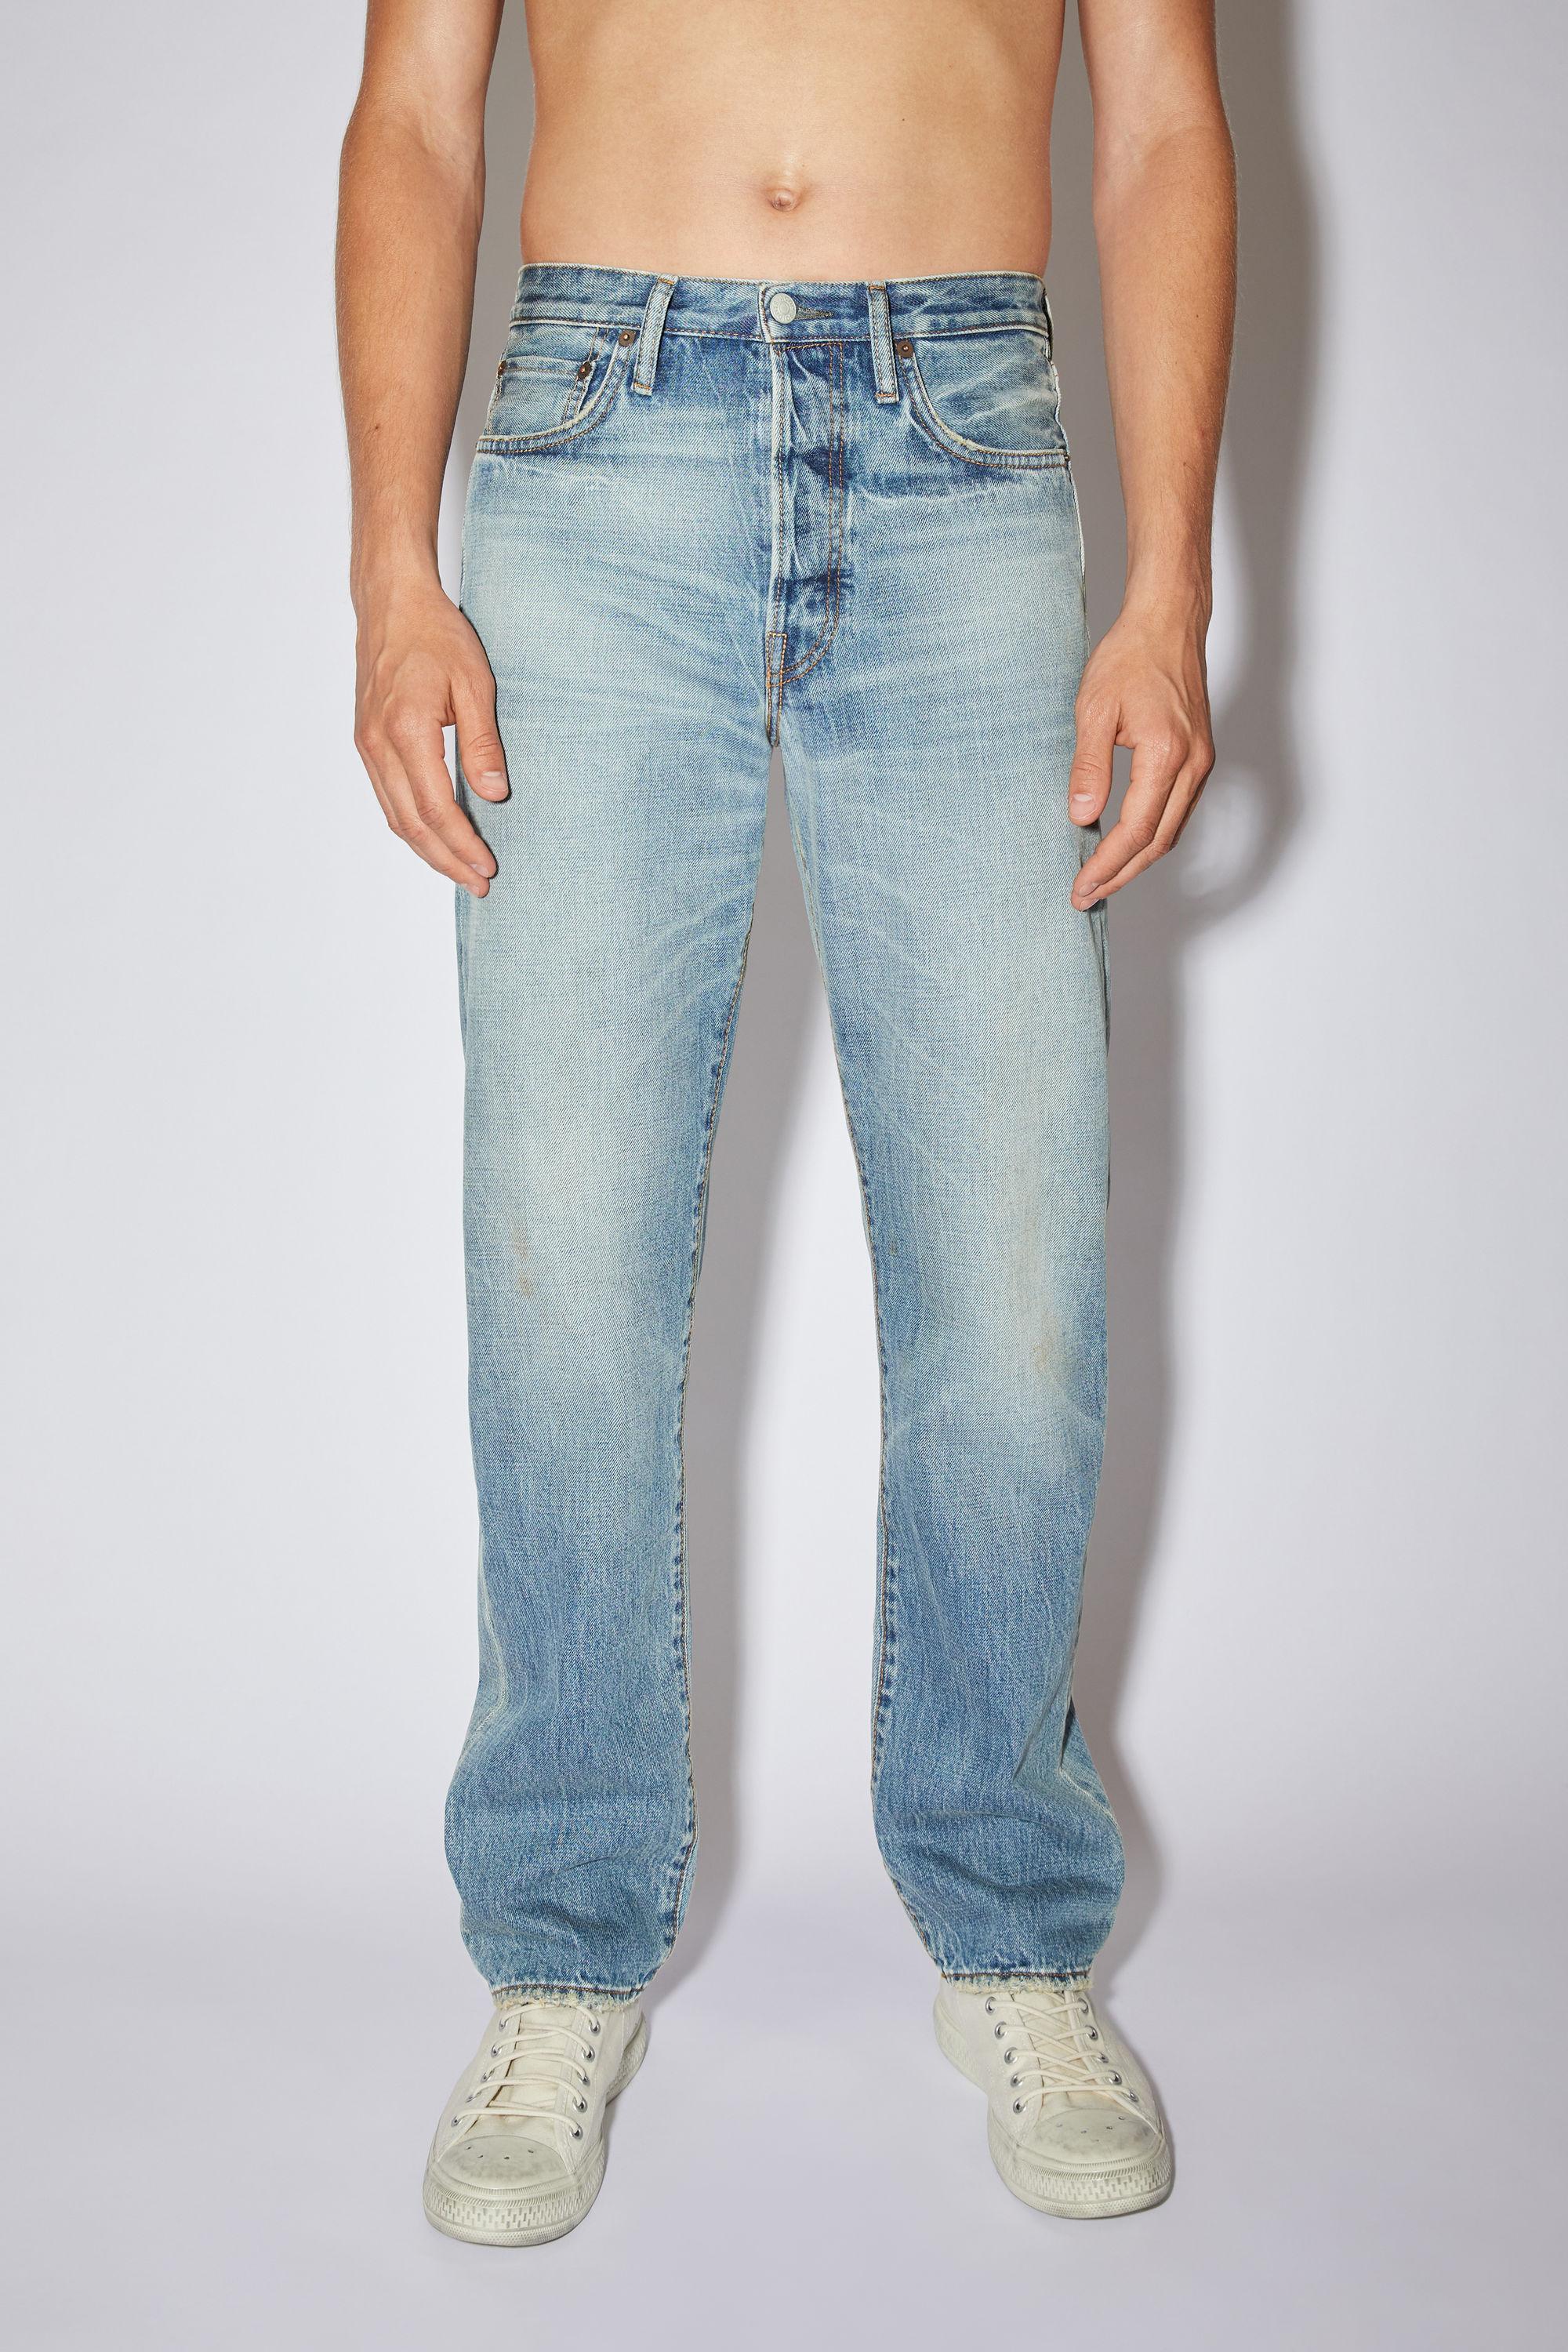 Acne Studios 1996 Watermark Regular Fit Jeans -1996 in Blue | Lyst